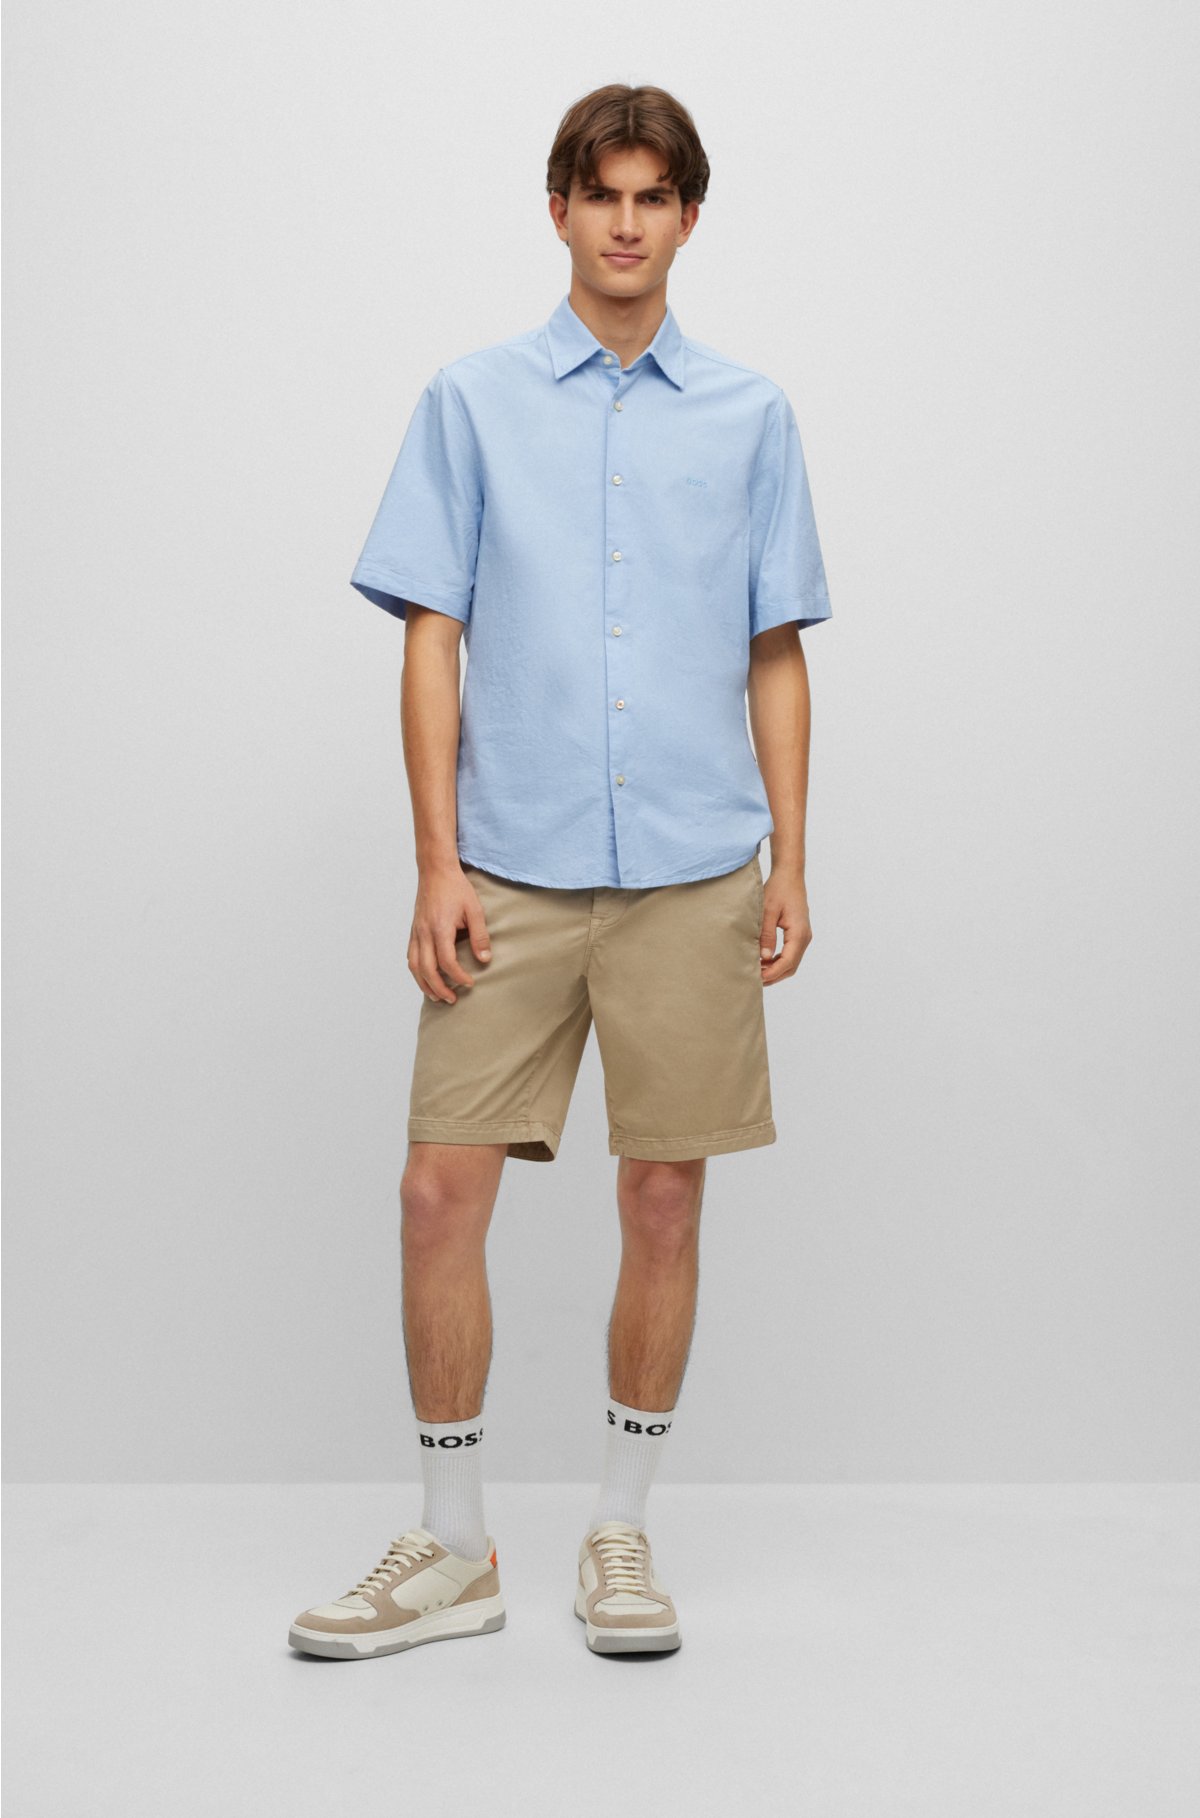 Regular-fit shirt in Oxford cotton, Light Blue